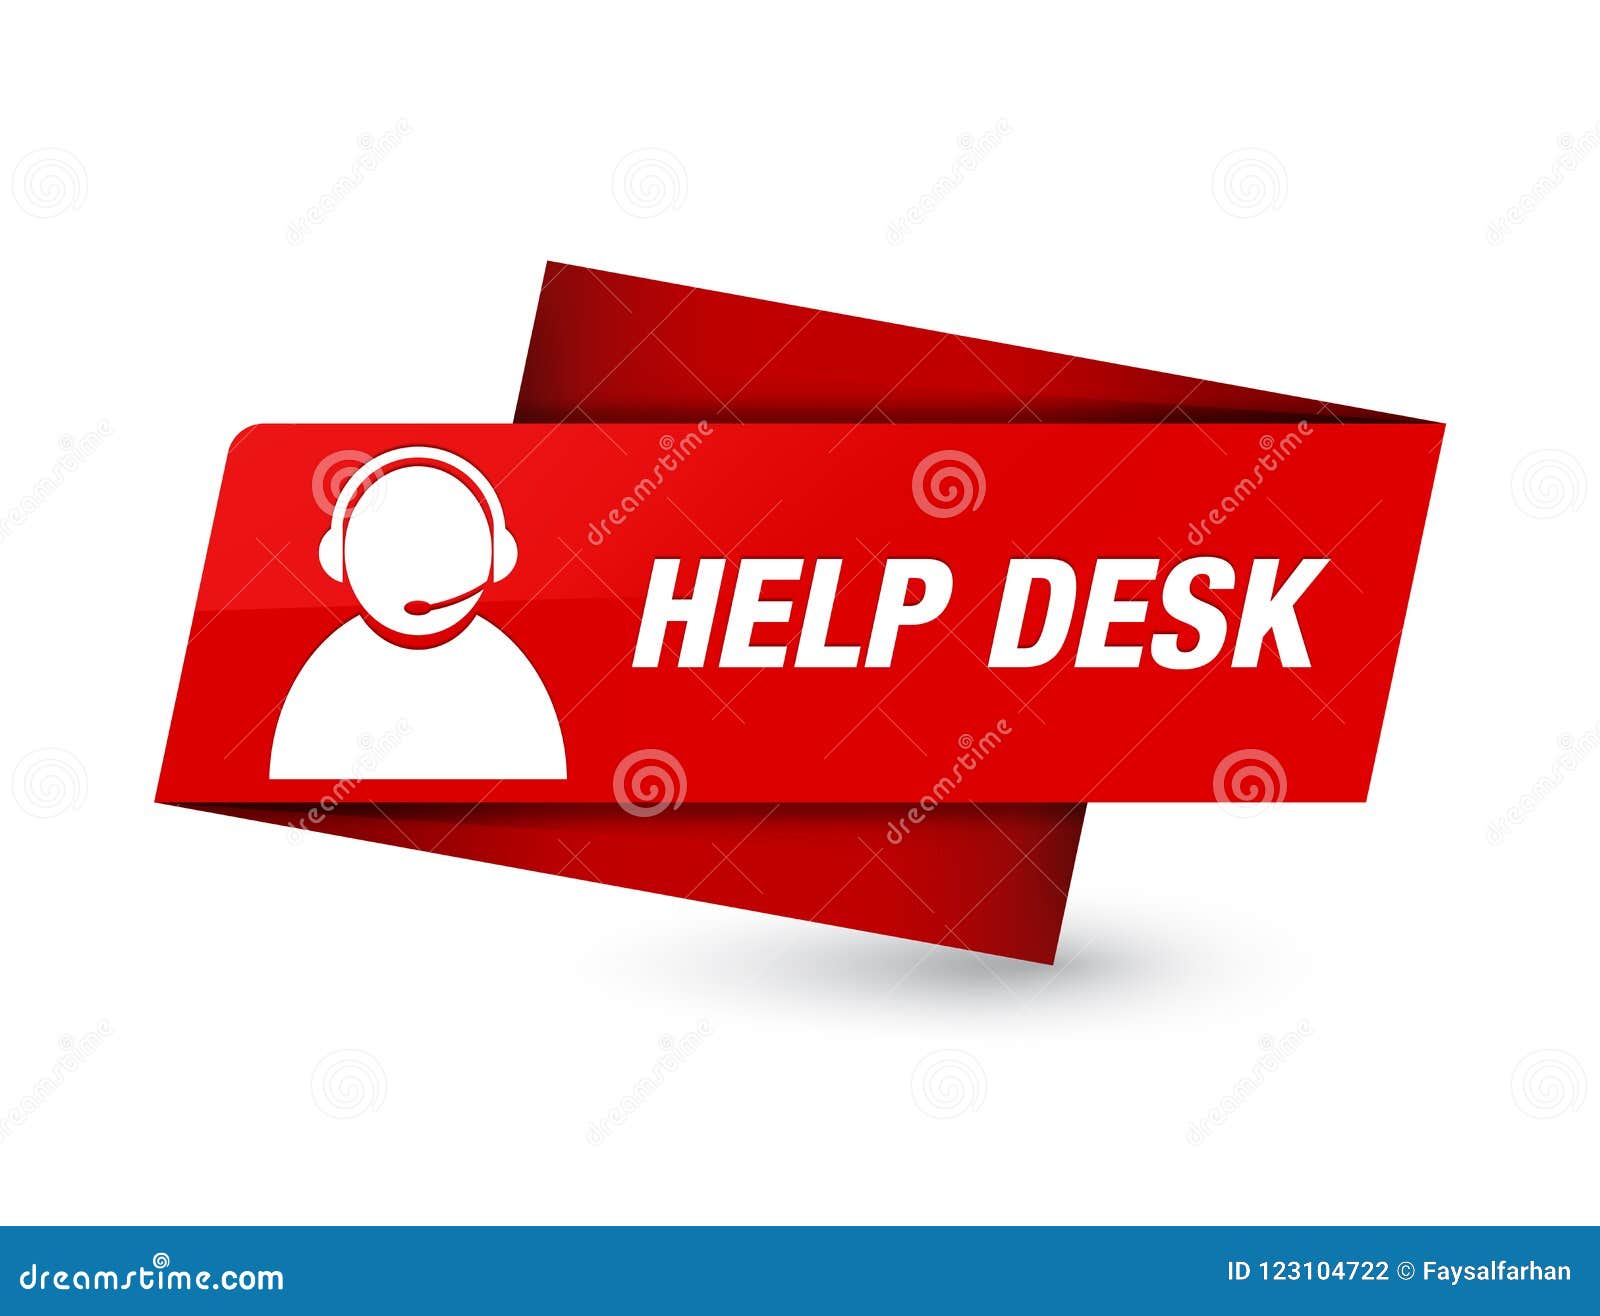 Help Desk Customer Care Icon Premium Red Tag Sign Stock